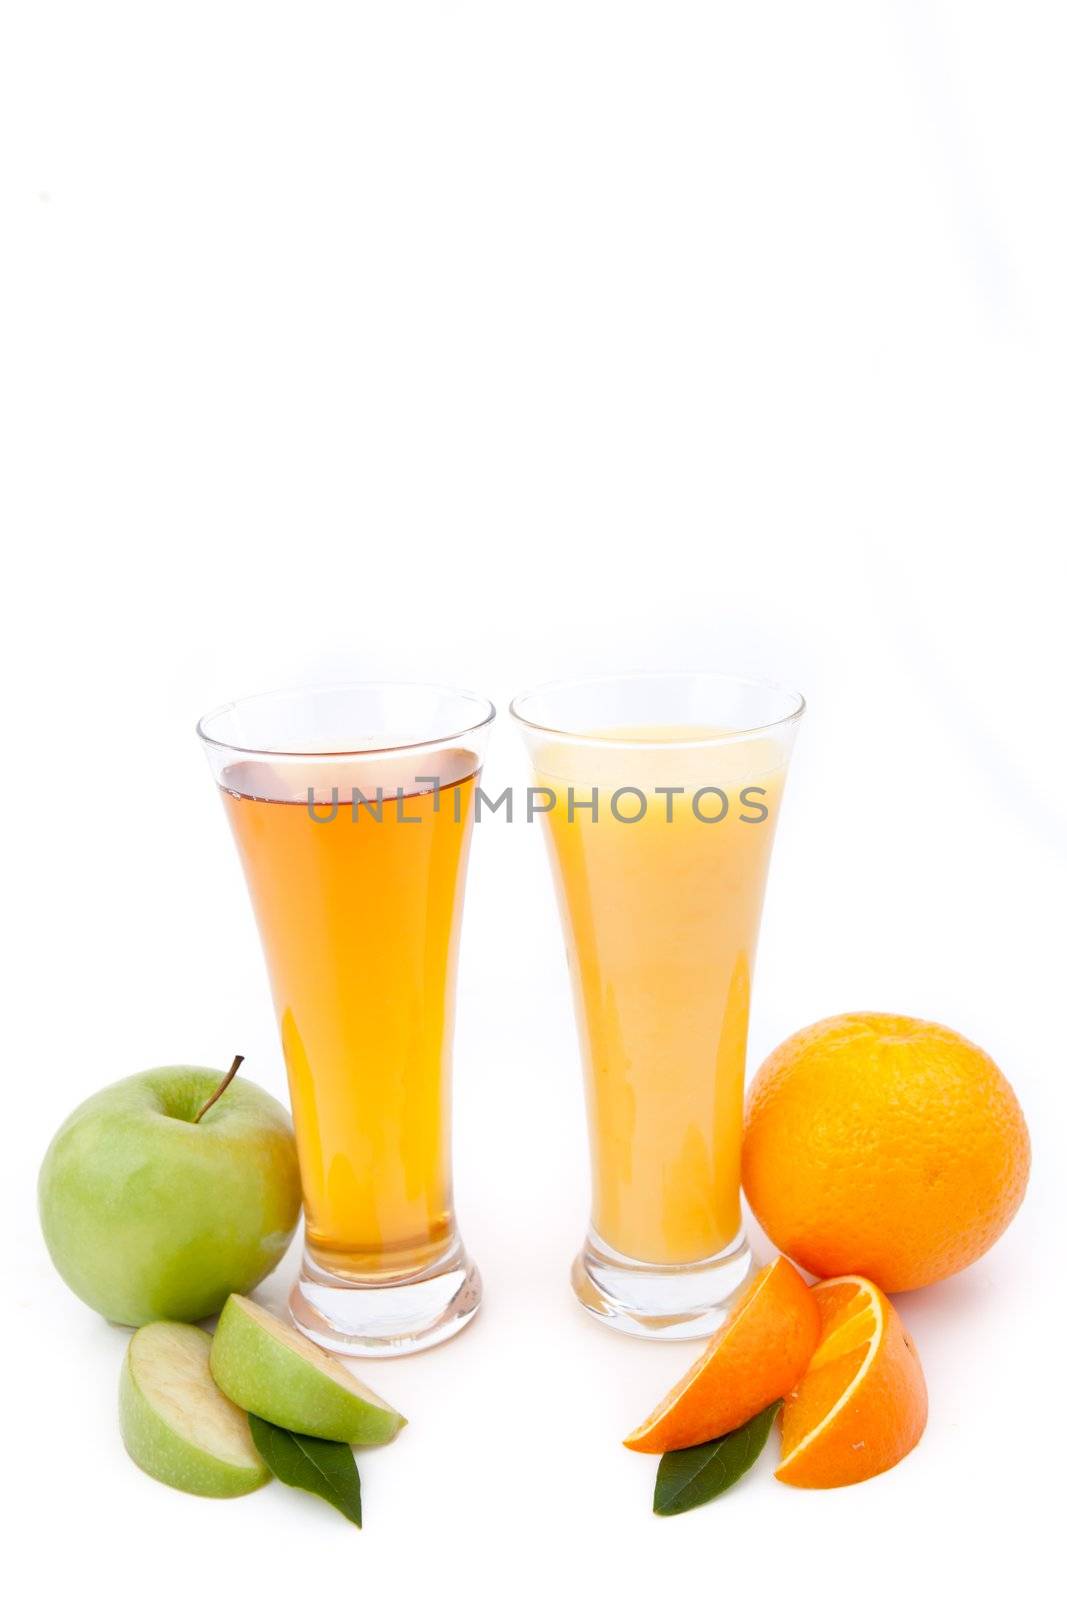 Apple juice and orange juice against a white background